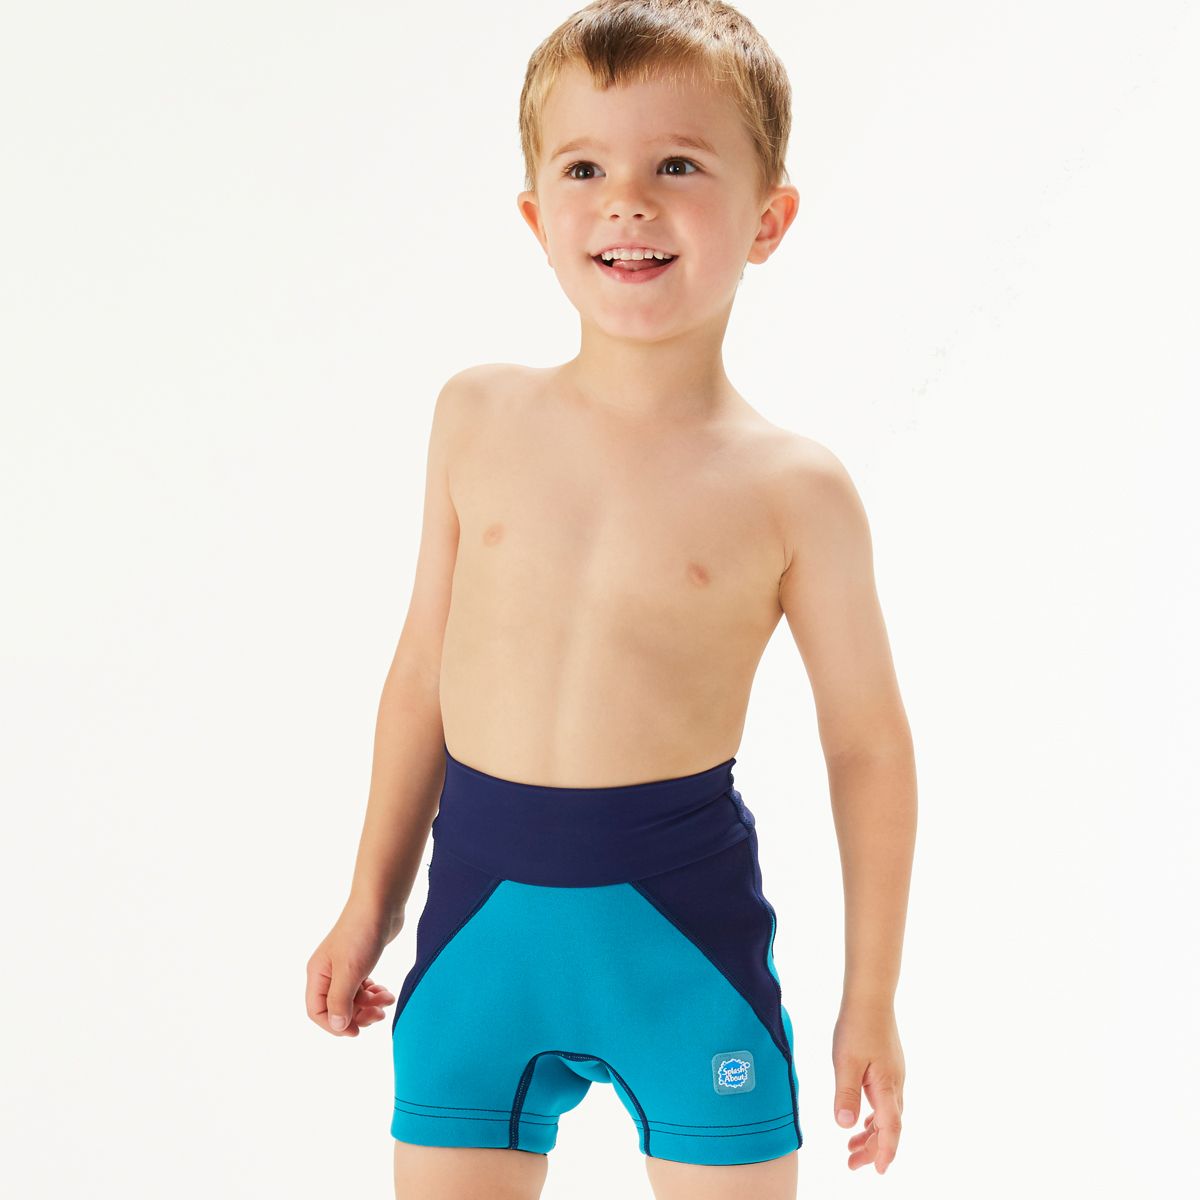 Lifestyle image of child wearing neoprene swim shorts in navy blue and jade.